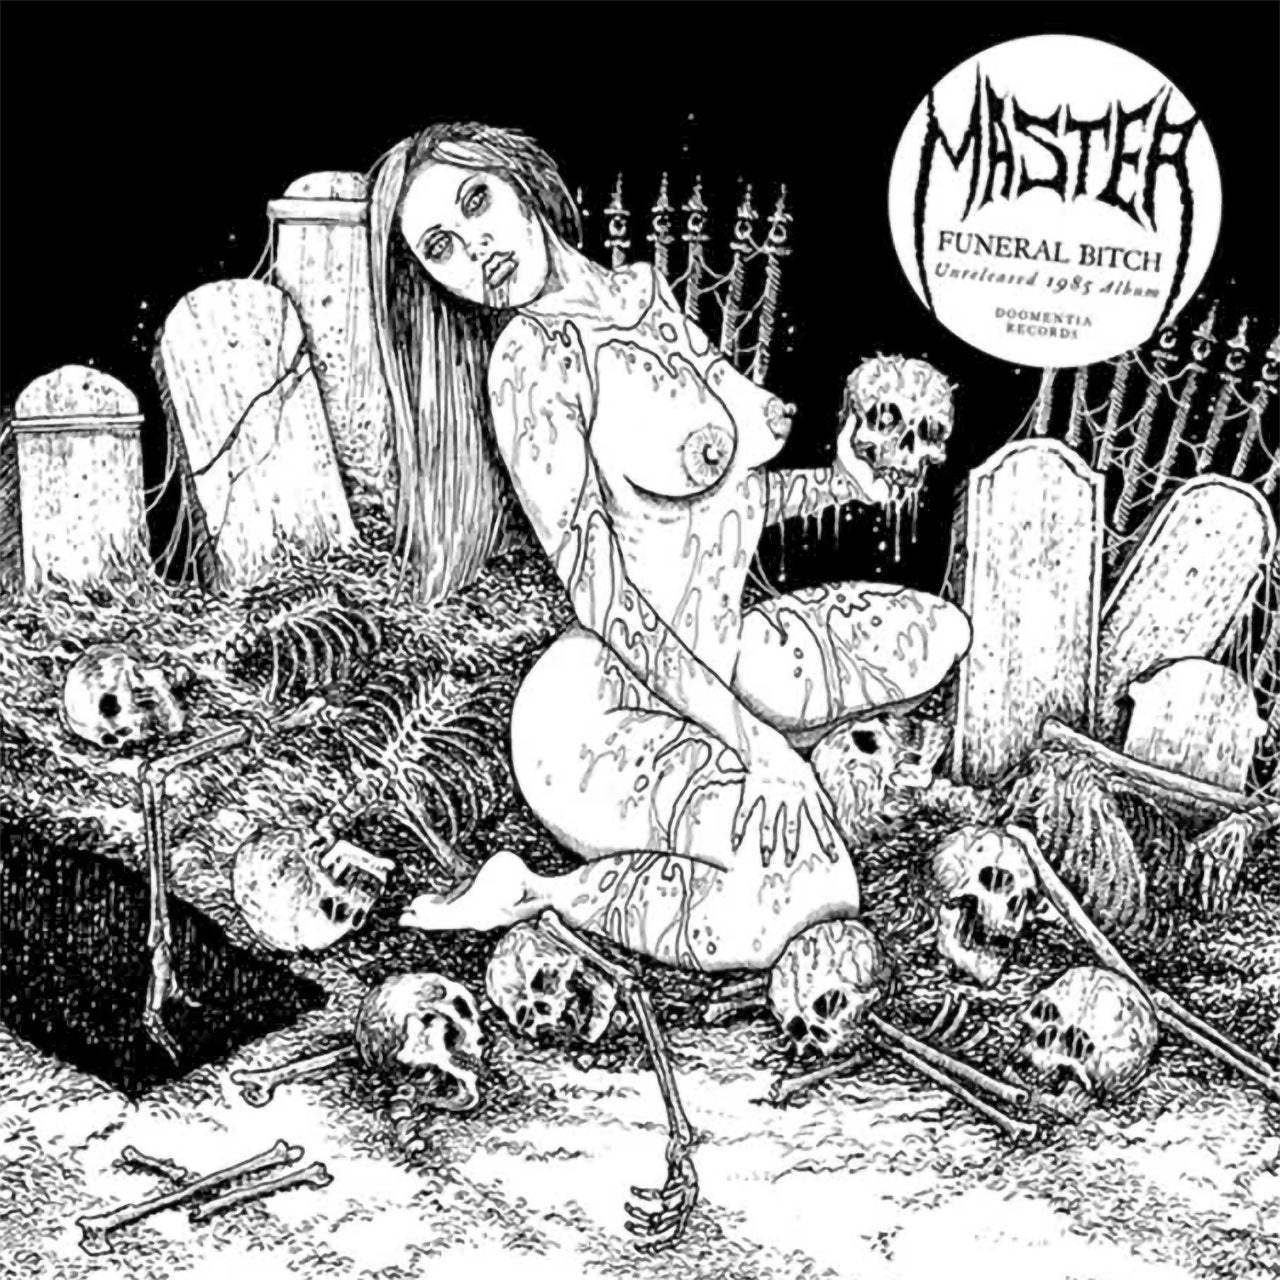 Master - Funeral Bitch (Unreleased 1985 Album) (CD)